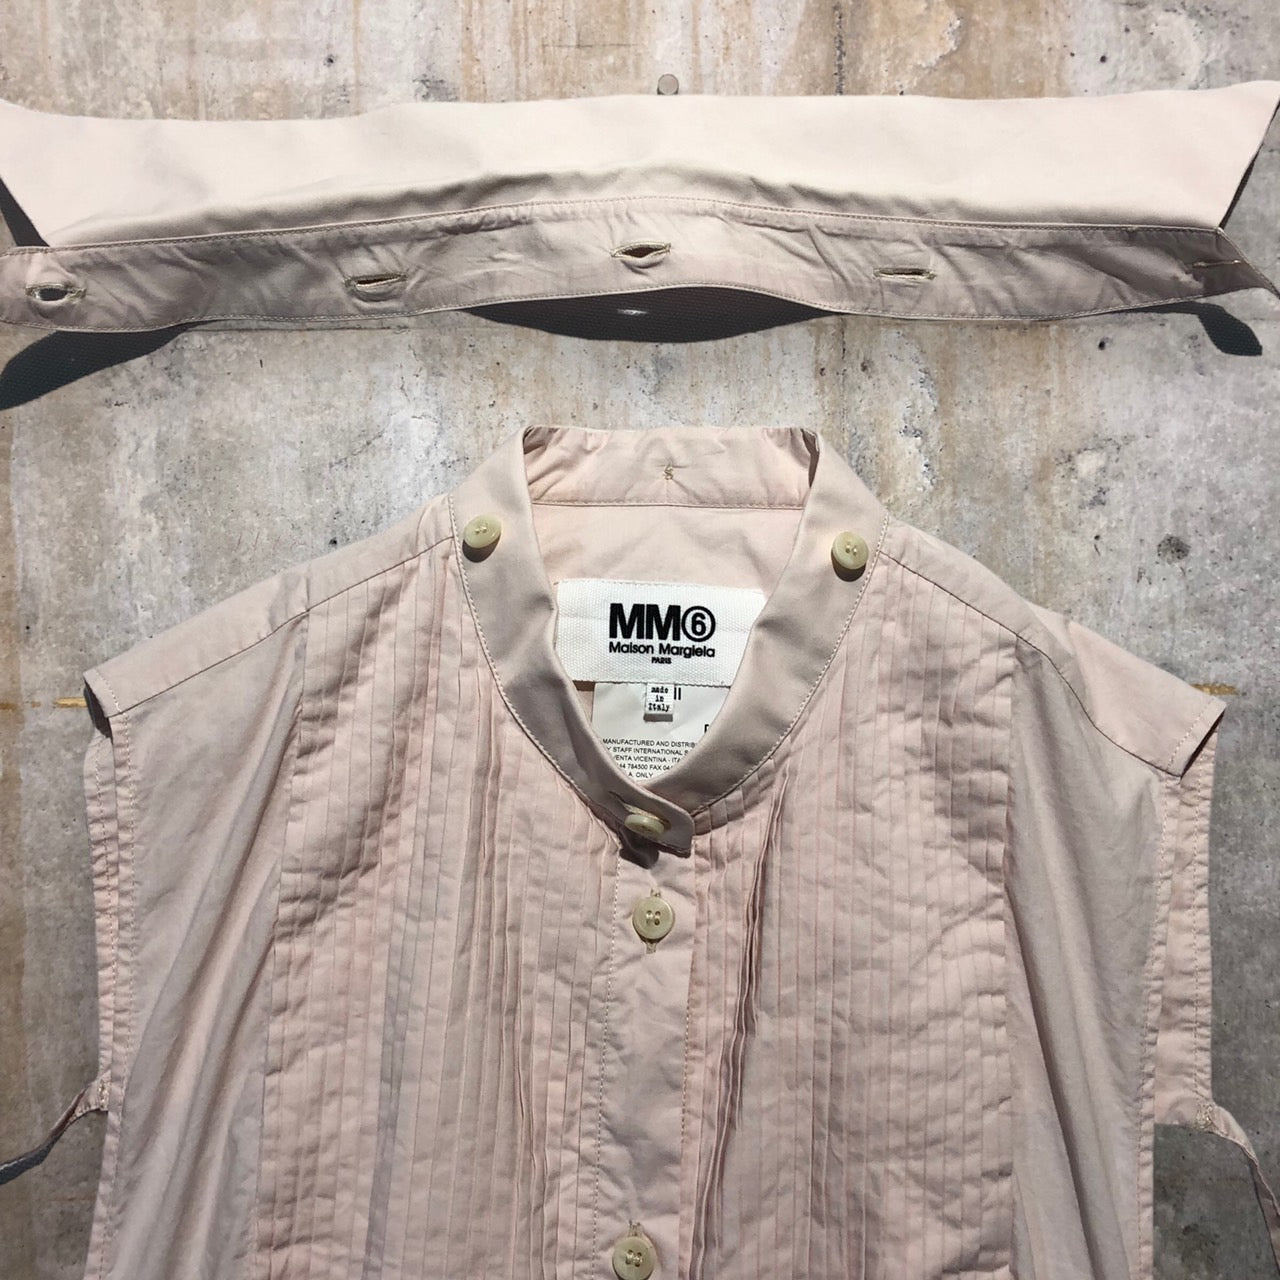 MM6(エムエムシックス) バックオープンプリーツシャツ S52TH0004 uni(FREEサイズ) ピンク　メゾンマルジェラ